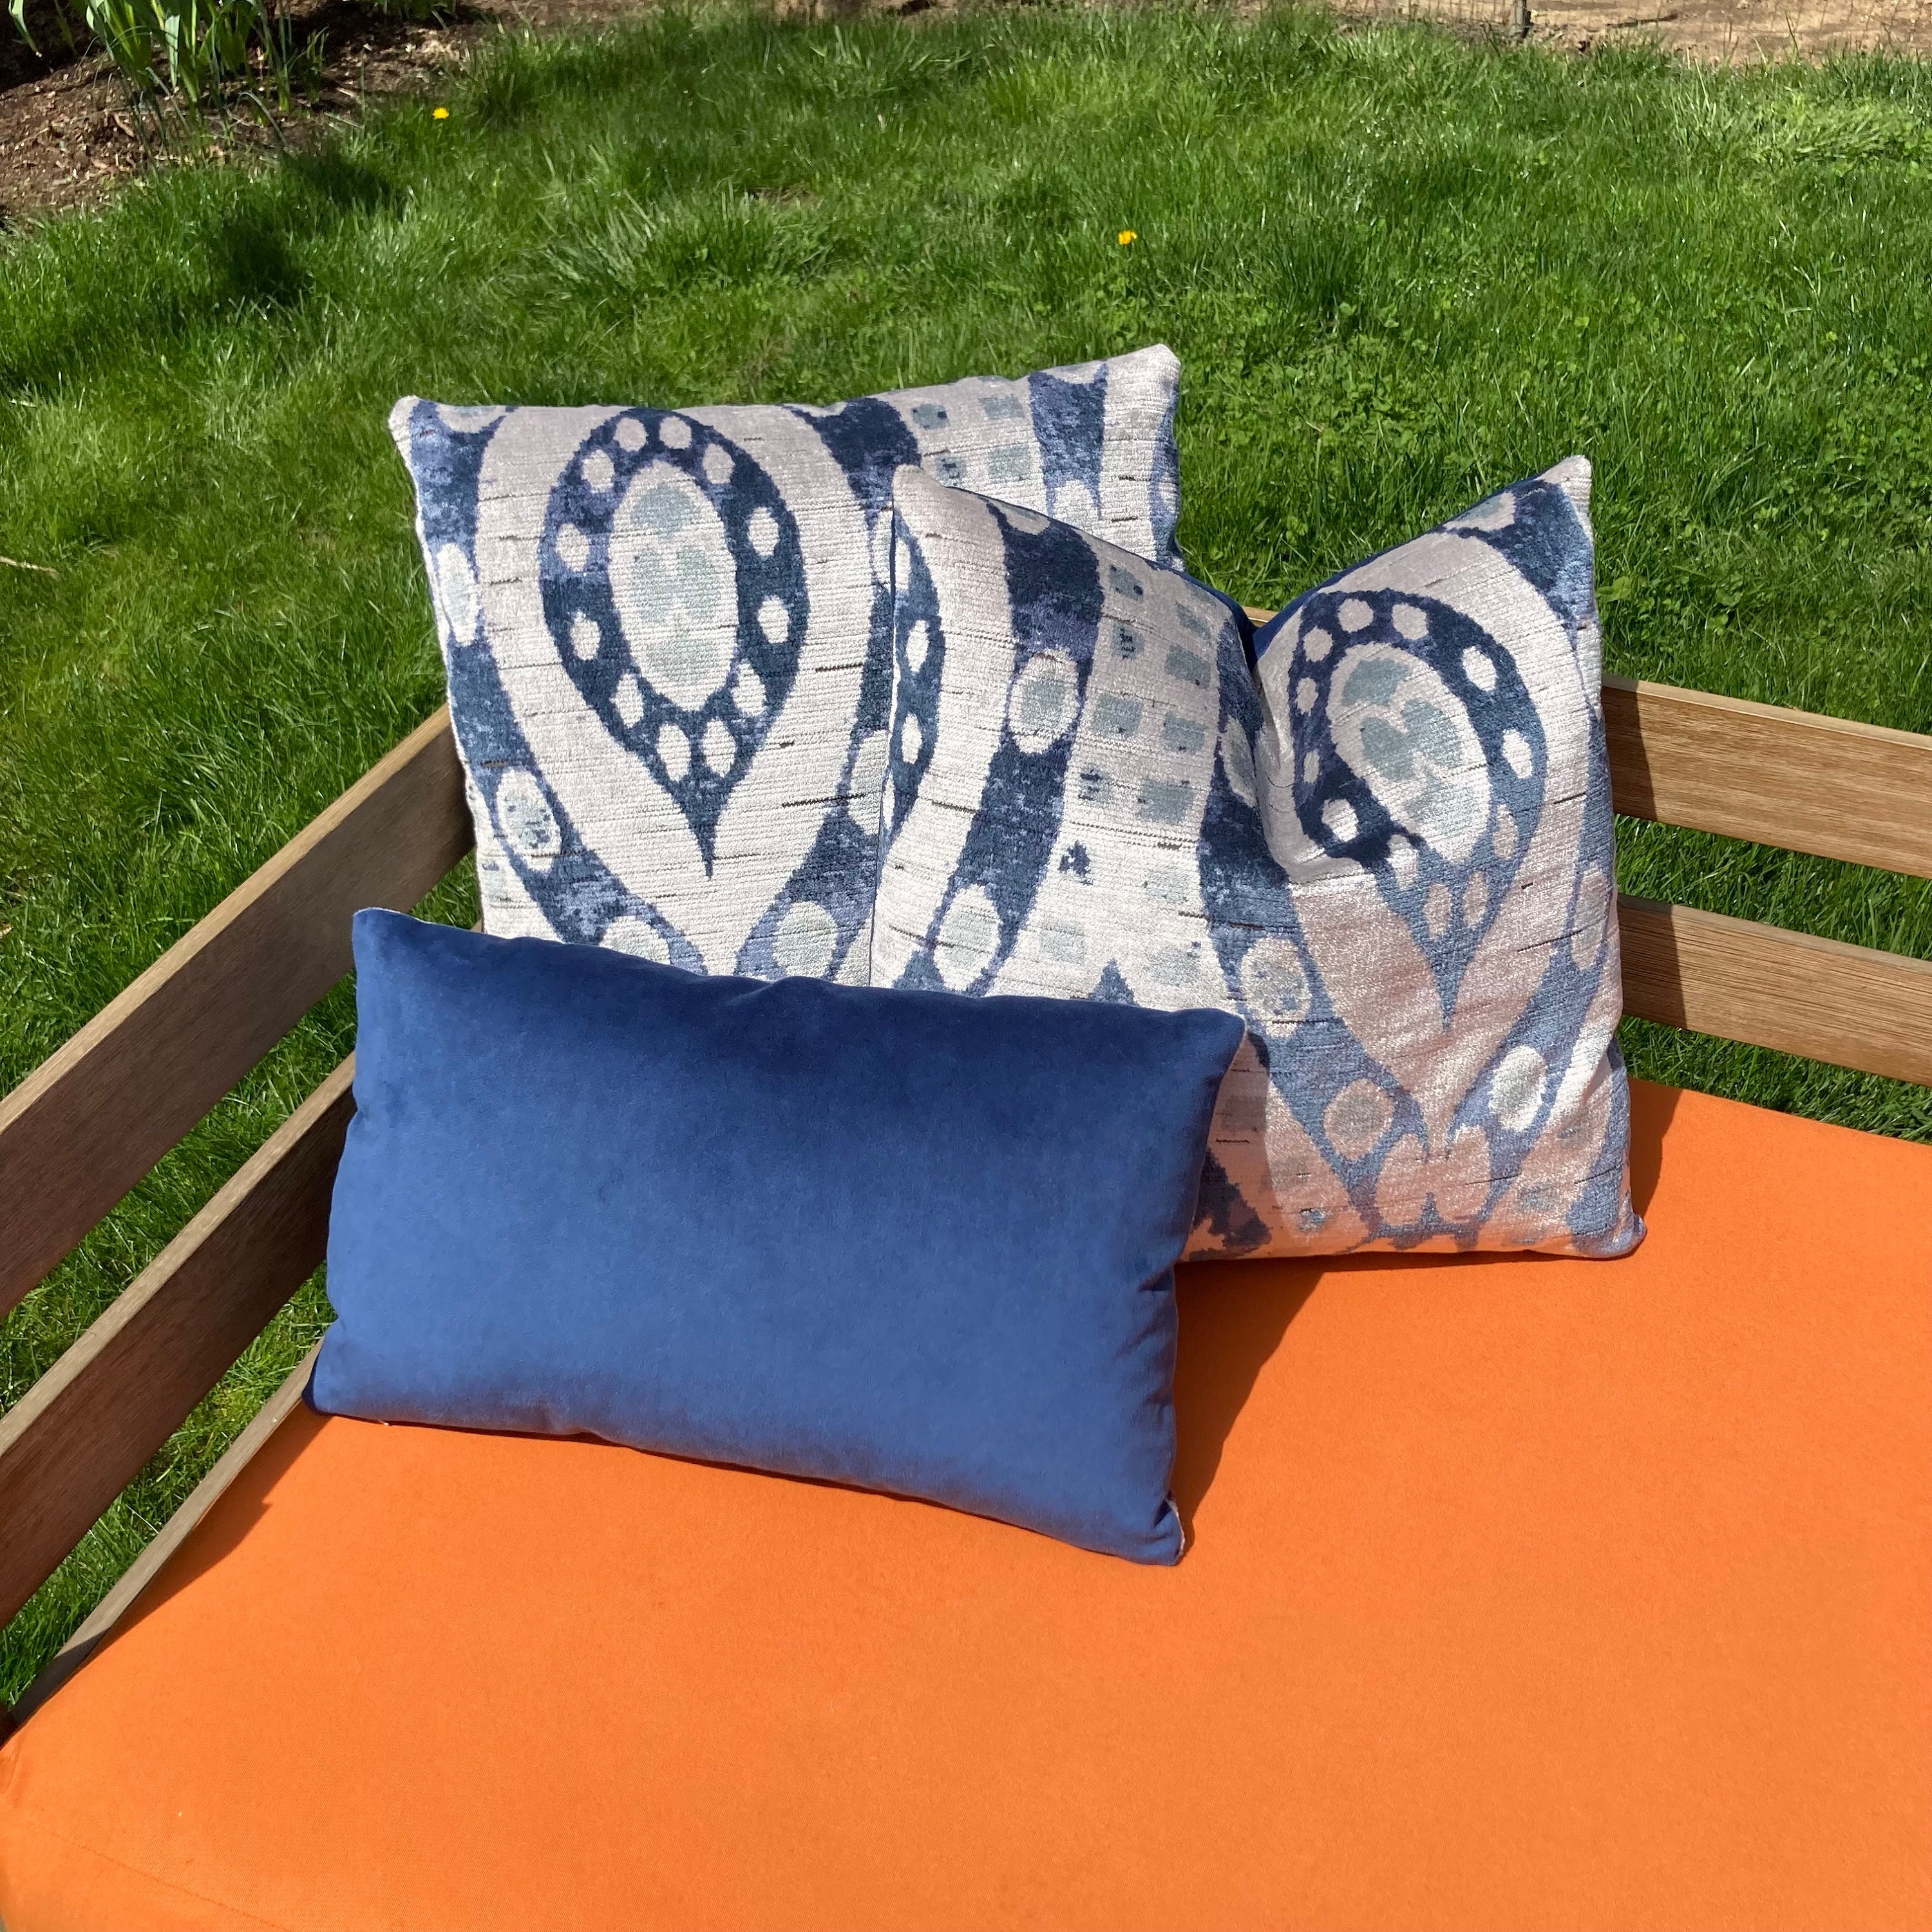 Rodeo Home Vika Checkered Cut Velvet Decorative Pillow